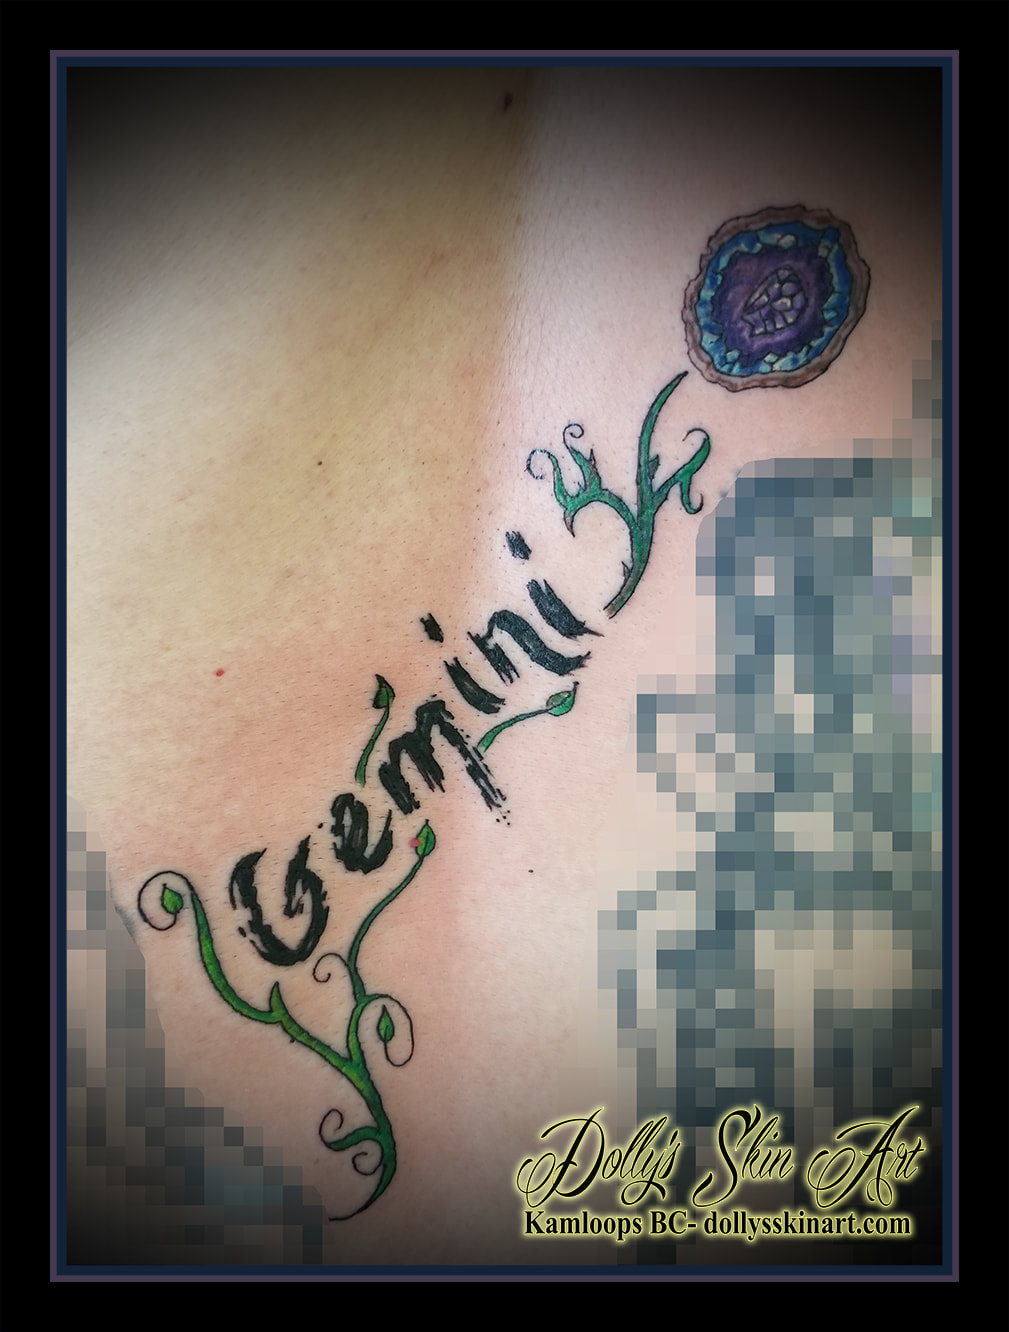 gemini brush stroke geode black lettering font green vine rock colour blue purple brown back tattoo kamloops dolly's skin art